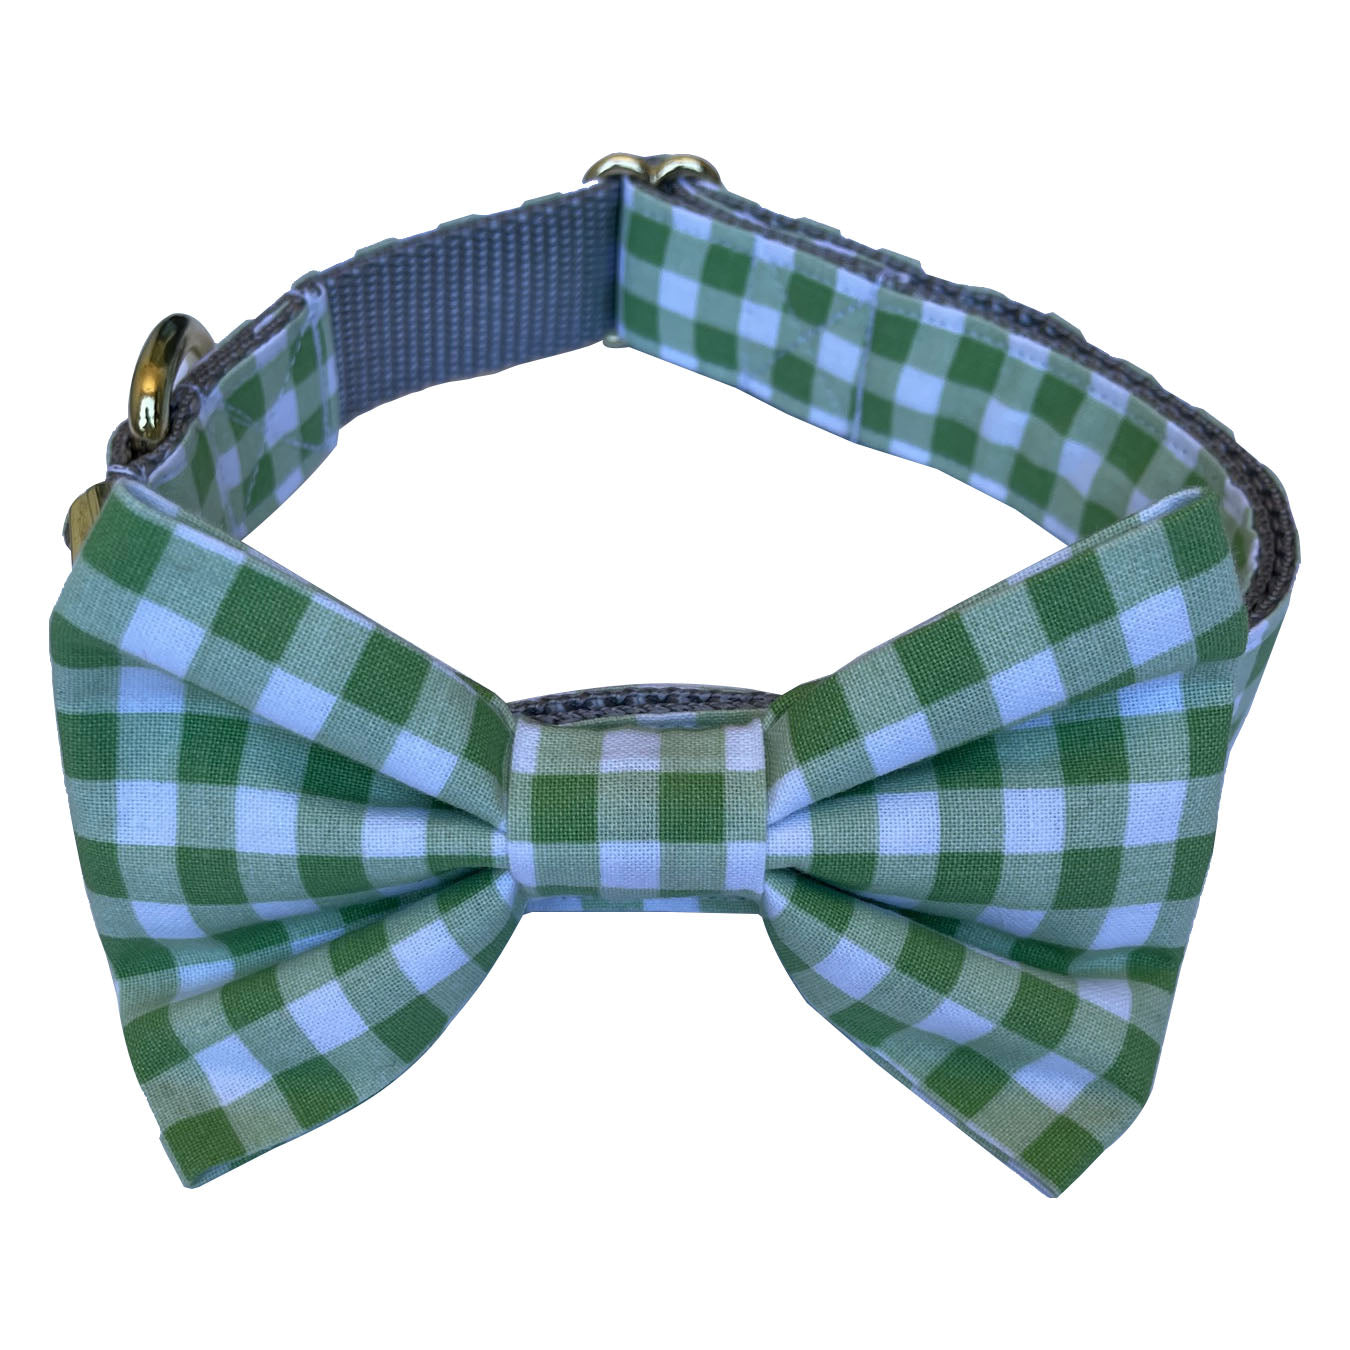 Bow tie PESh 714 BICOLOR LV - Hedva-fashion